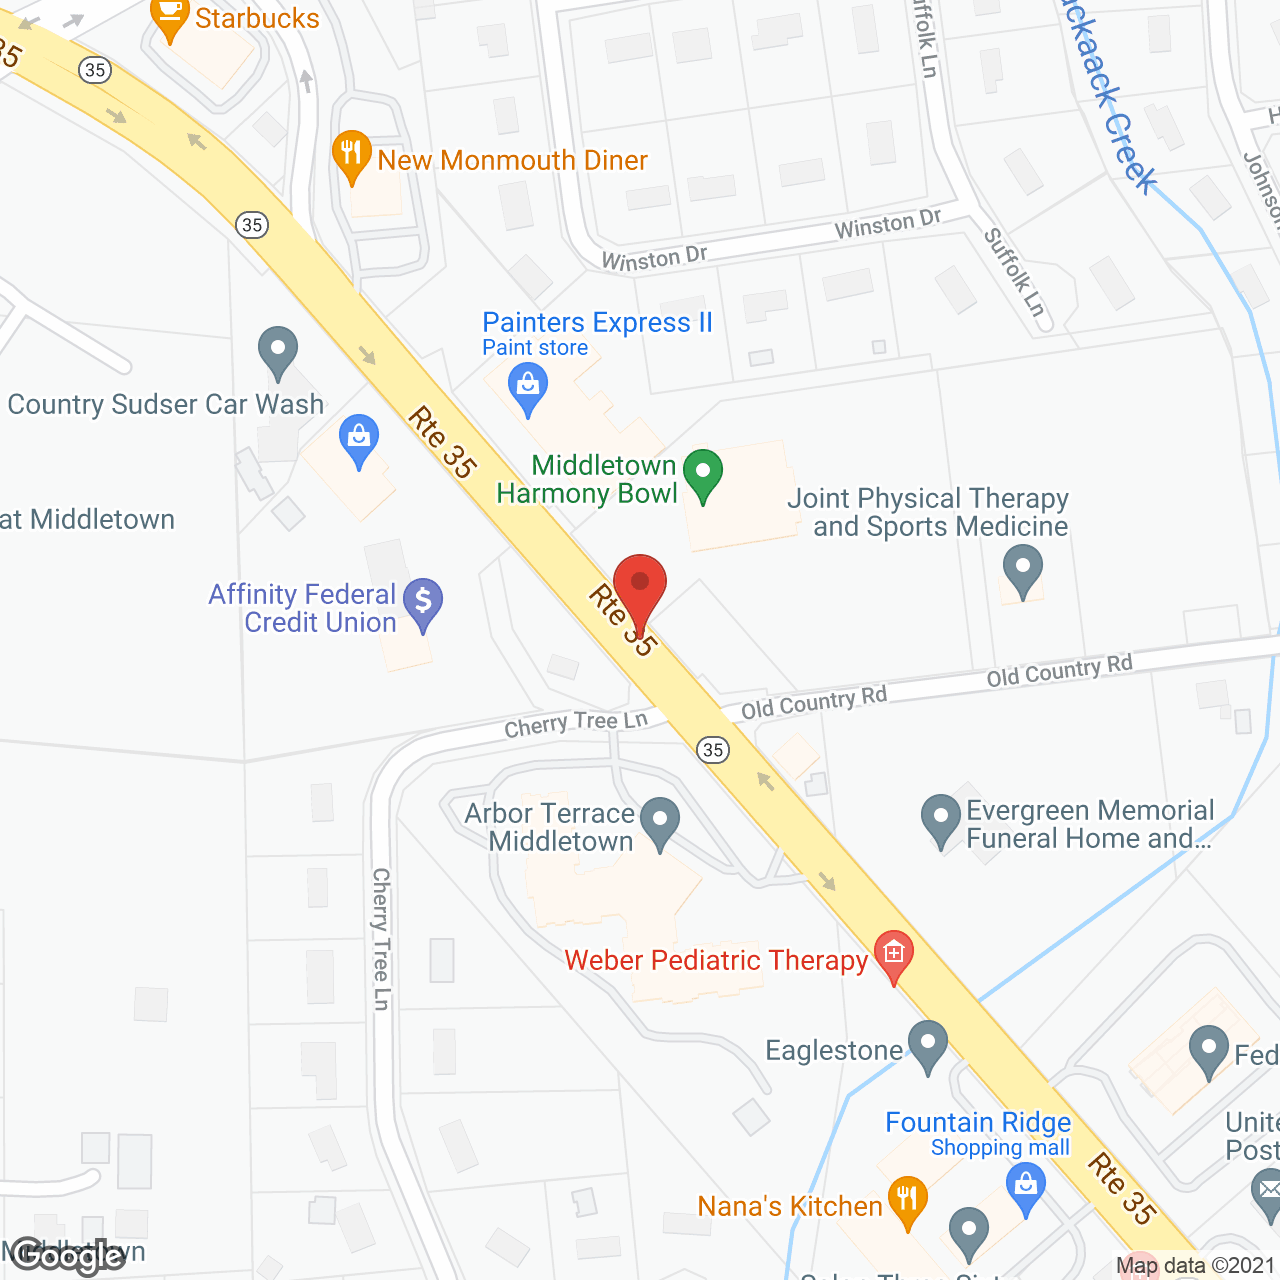 Arbor Terrace Middletown in google map